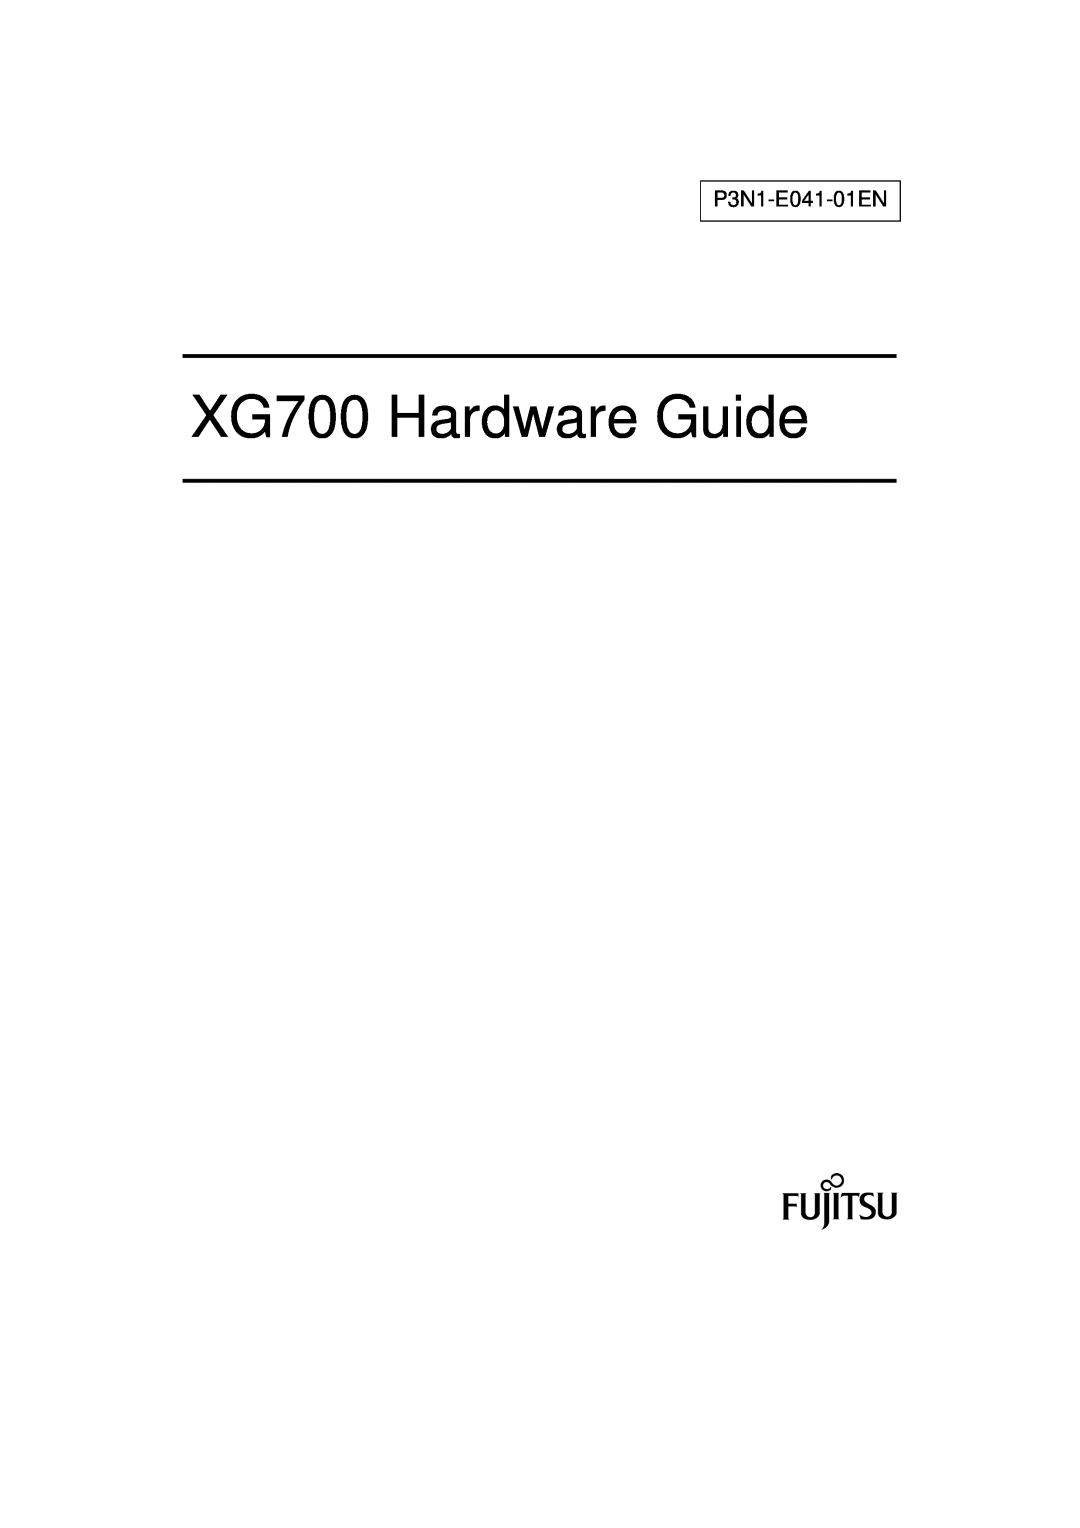 Fujitsu manual XG700 Hardware Guide, P3N1-E041-01EN 